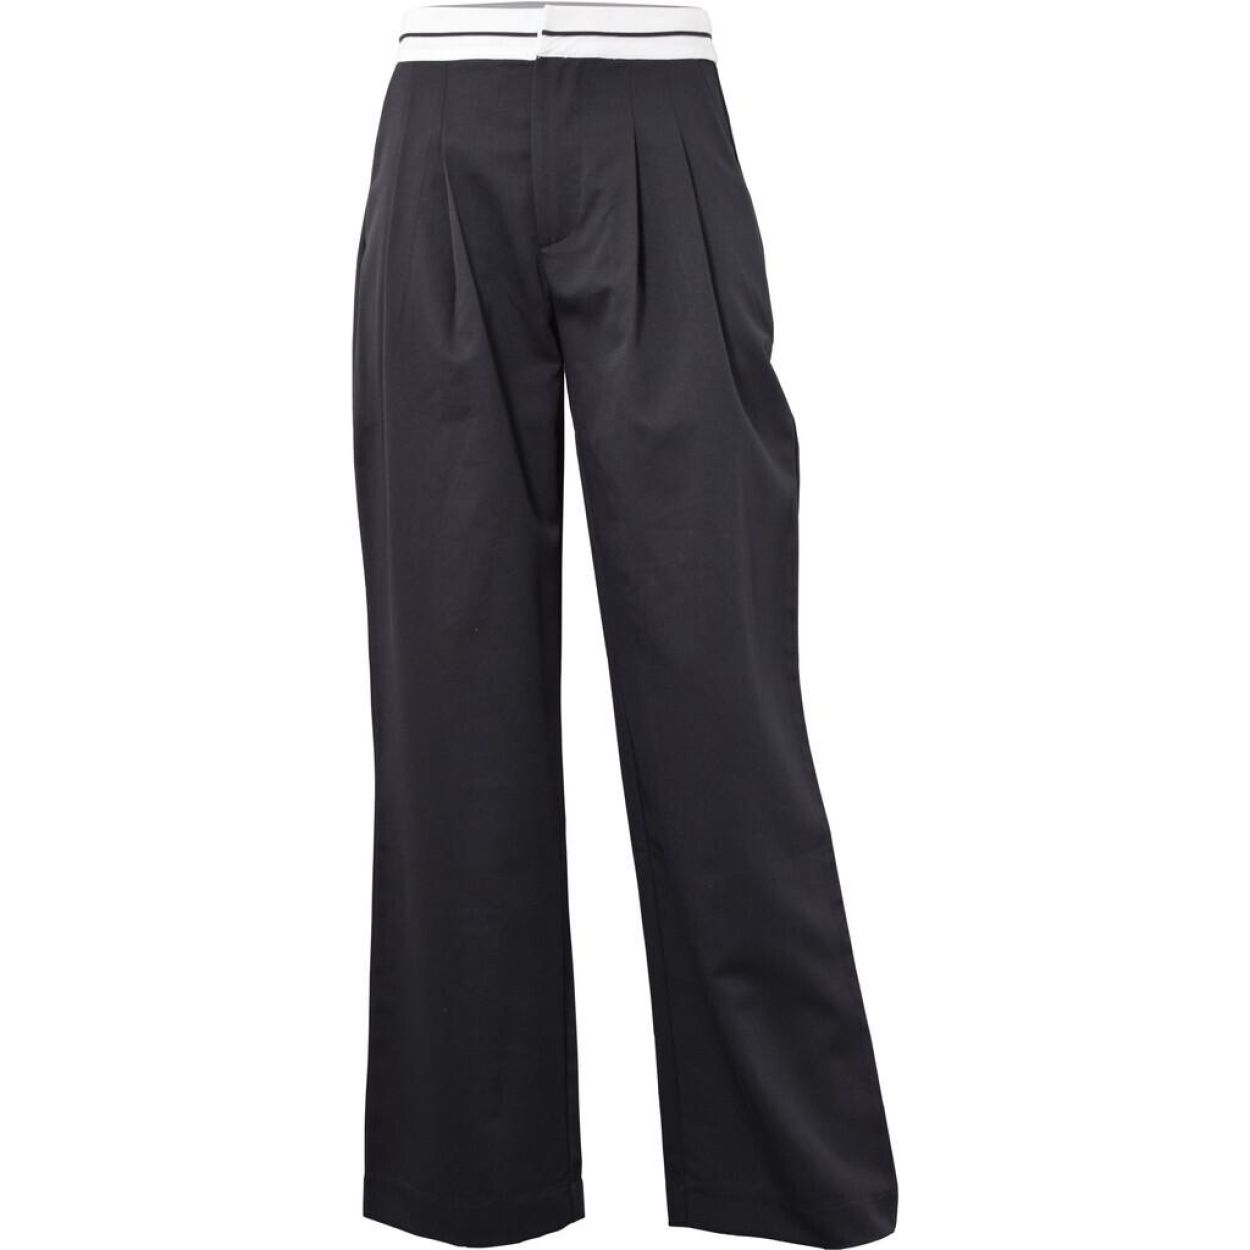 HOUNd Formal pants (7230858/099 Black) - WeekendMode